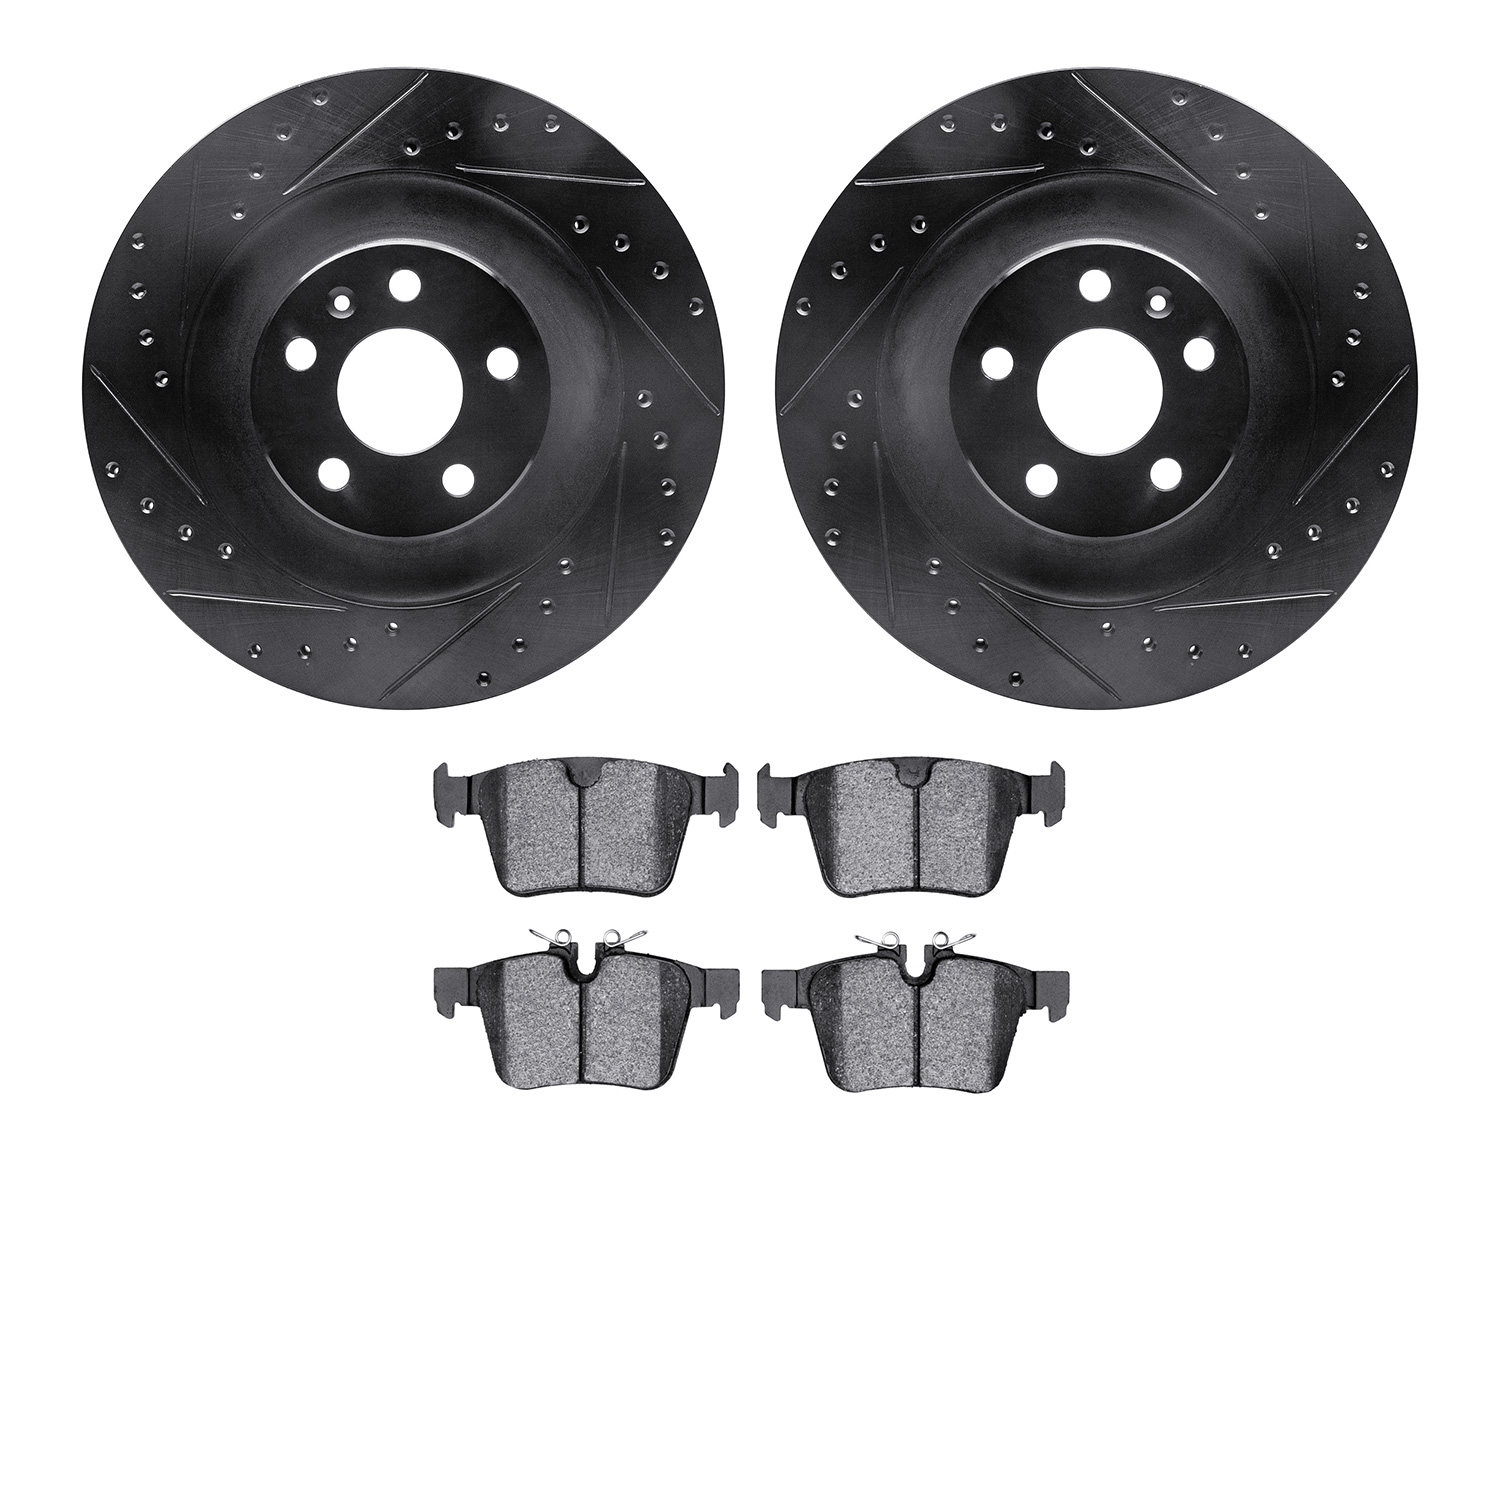 8302-27073 Drilled/Slotted Brake Rotors with 3000-Series Ceramic Brake Pads Kit [Black], Fits Select Multiple Makes/Models, Posi